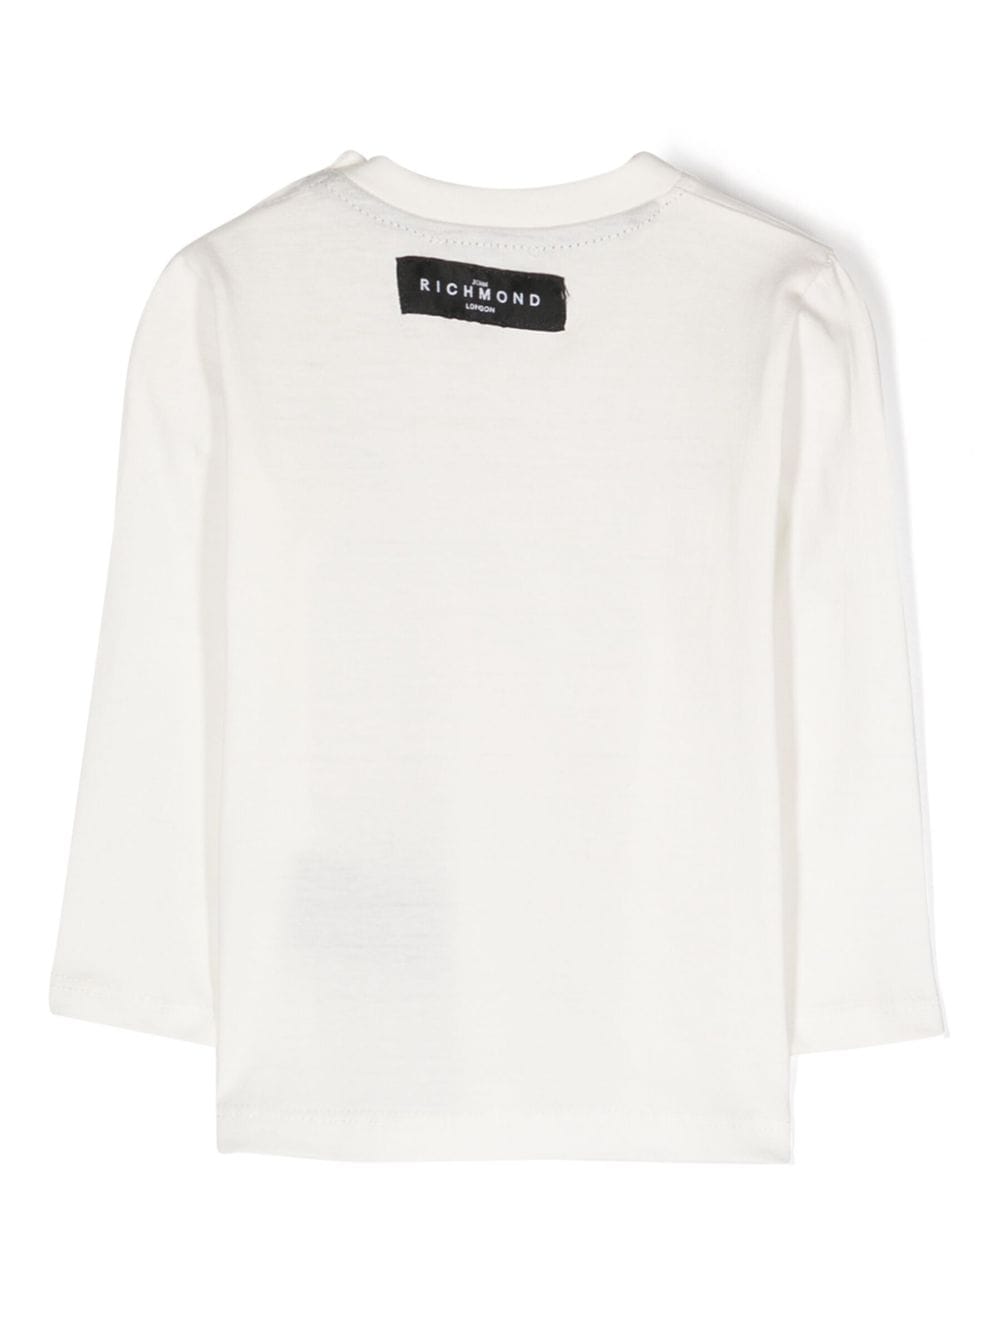 T-shirt bianca cloud unisex con logo